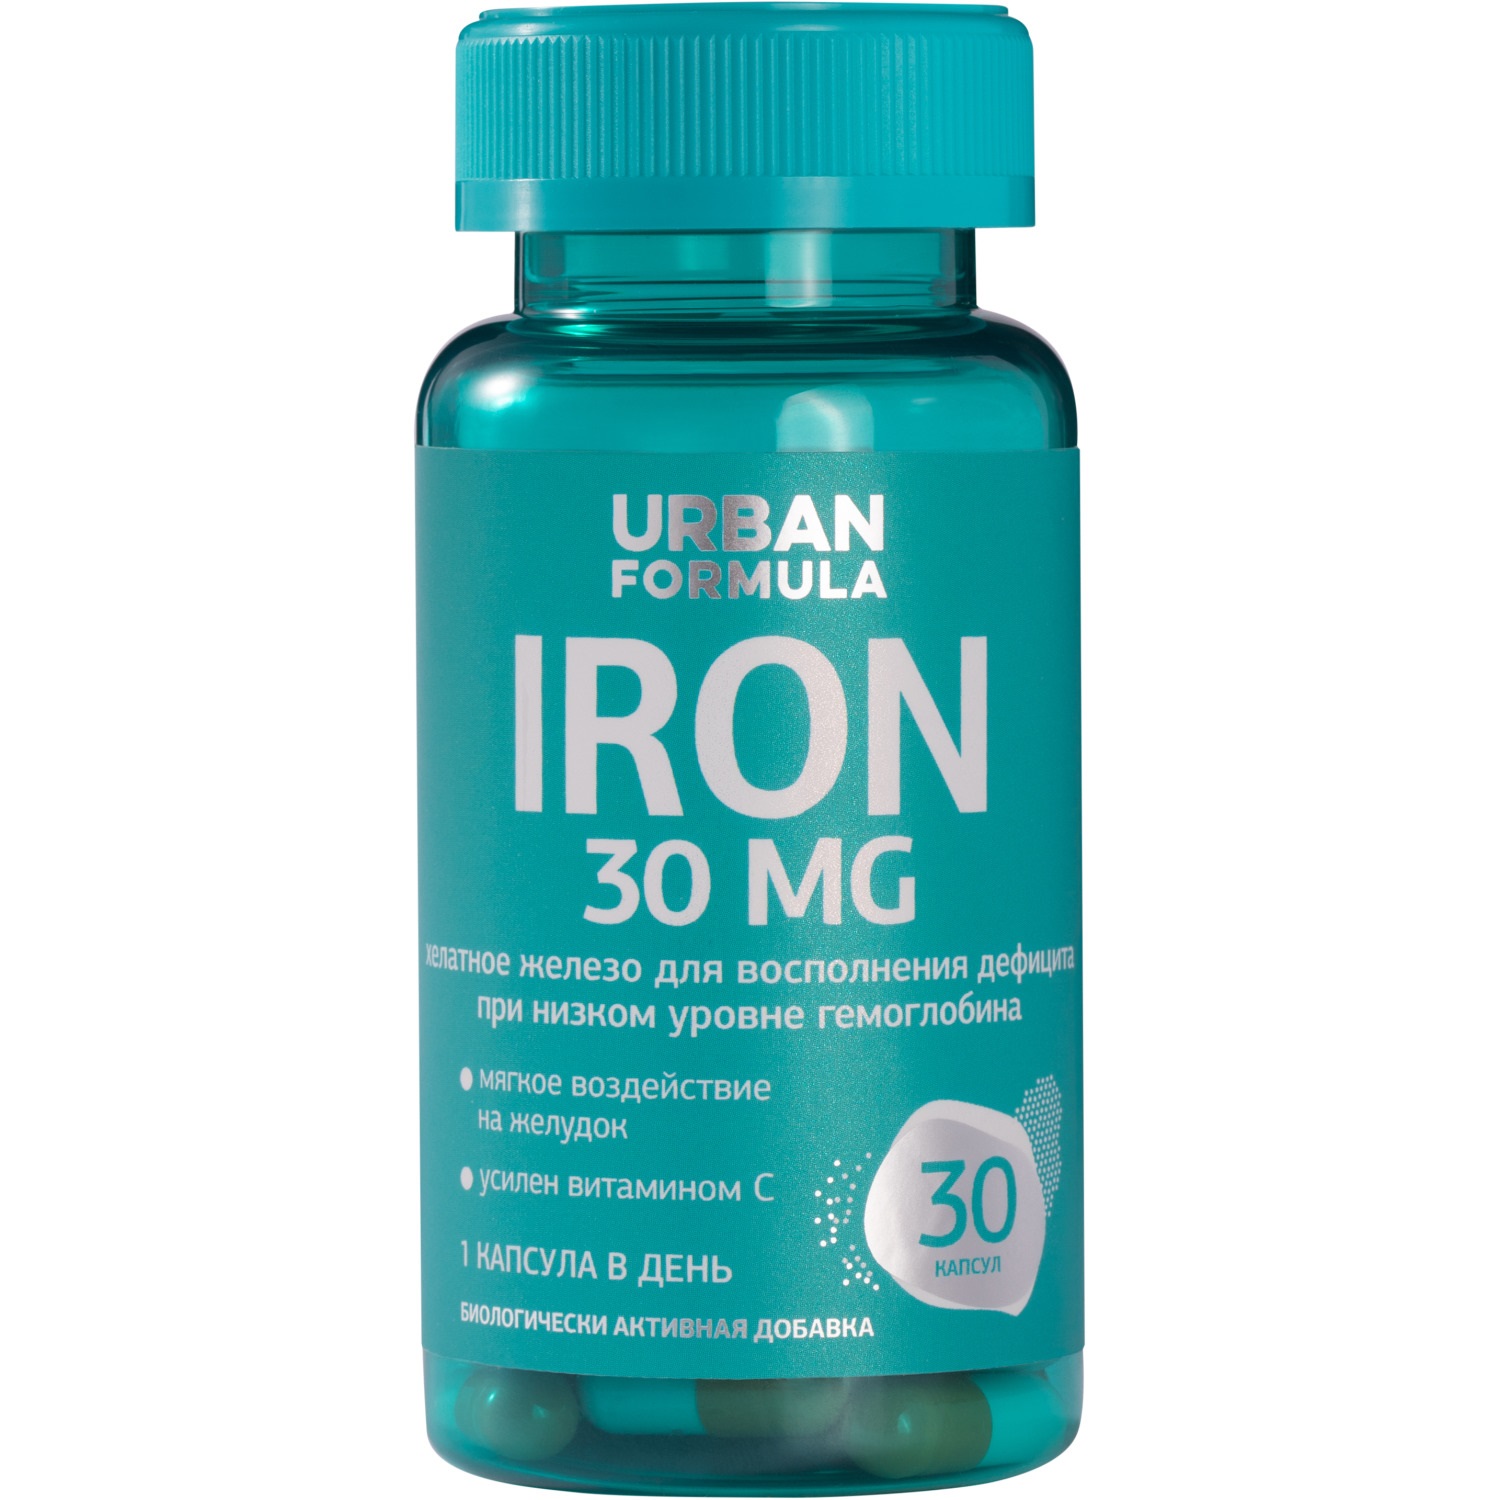 Urban Formula Комплекс Iron для восполнения дефицита железа 30 мг, 30 капсул (Urban Formula, Basic) urban formula super iron